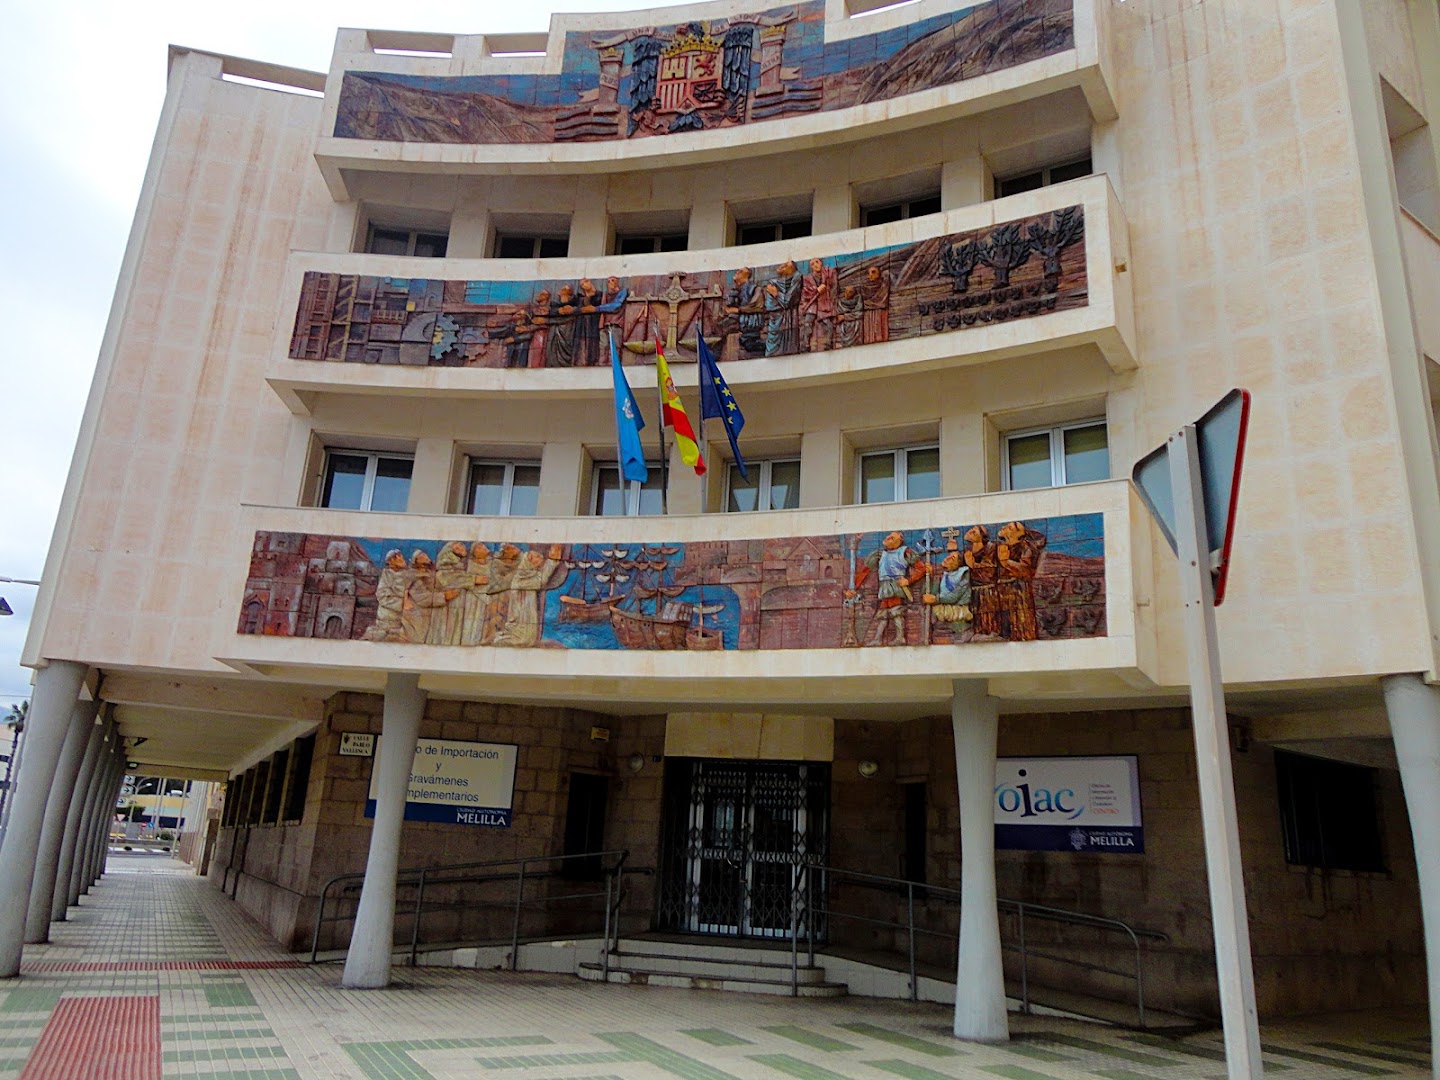 OIAC - Ciudad Autónoma de Melilla